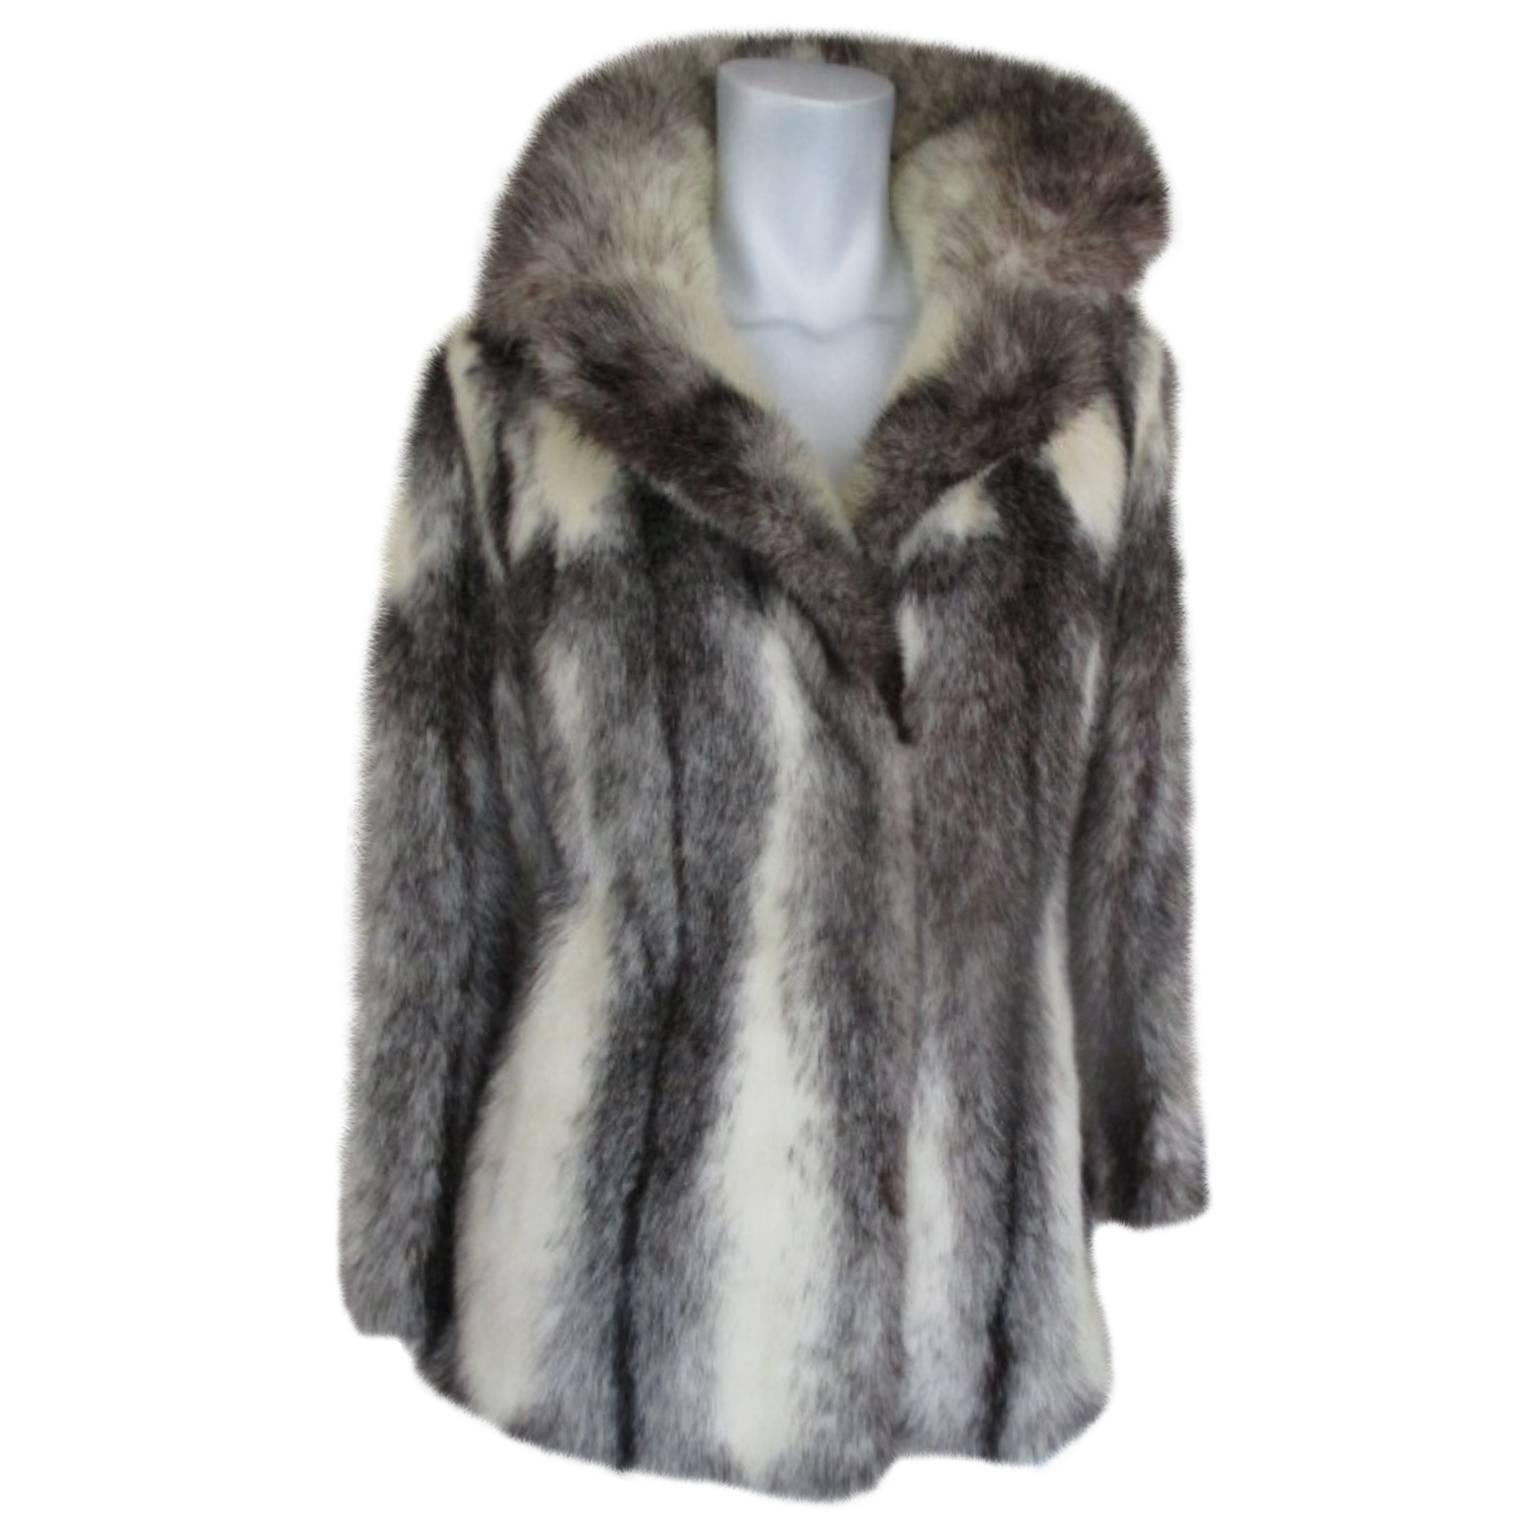 Beautiful rare kohinoor mink fur jacket